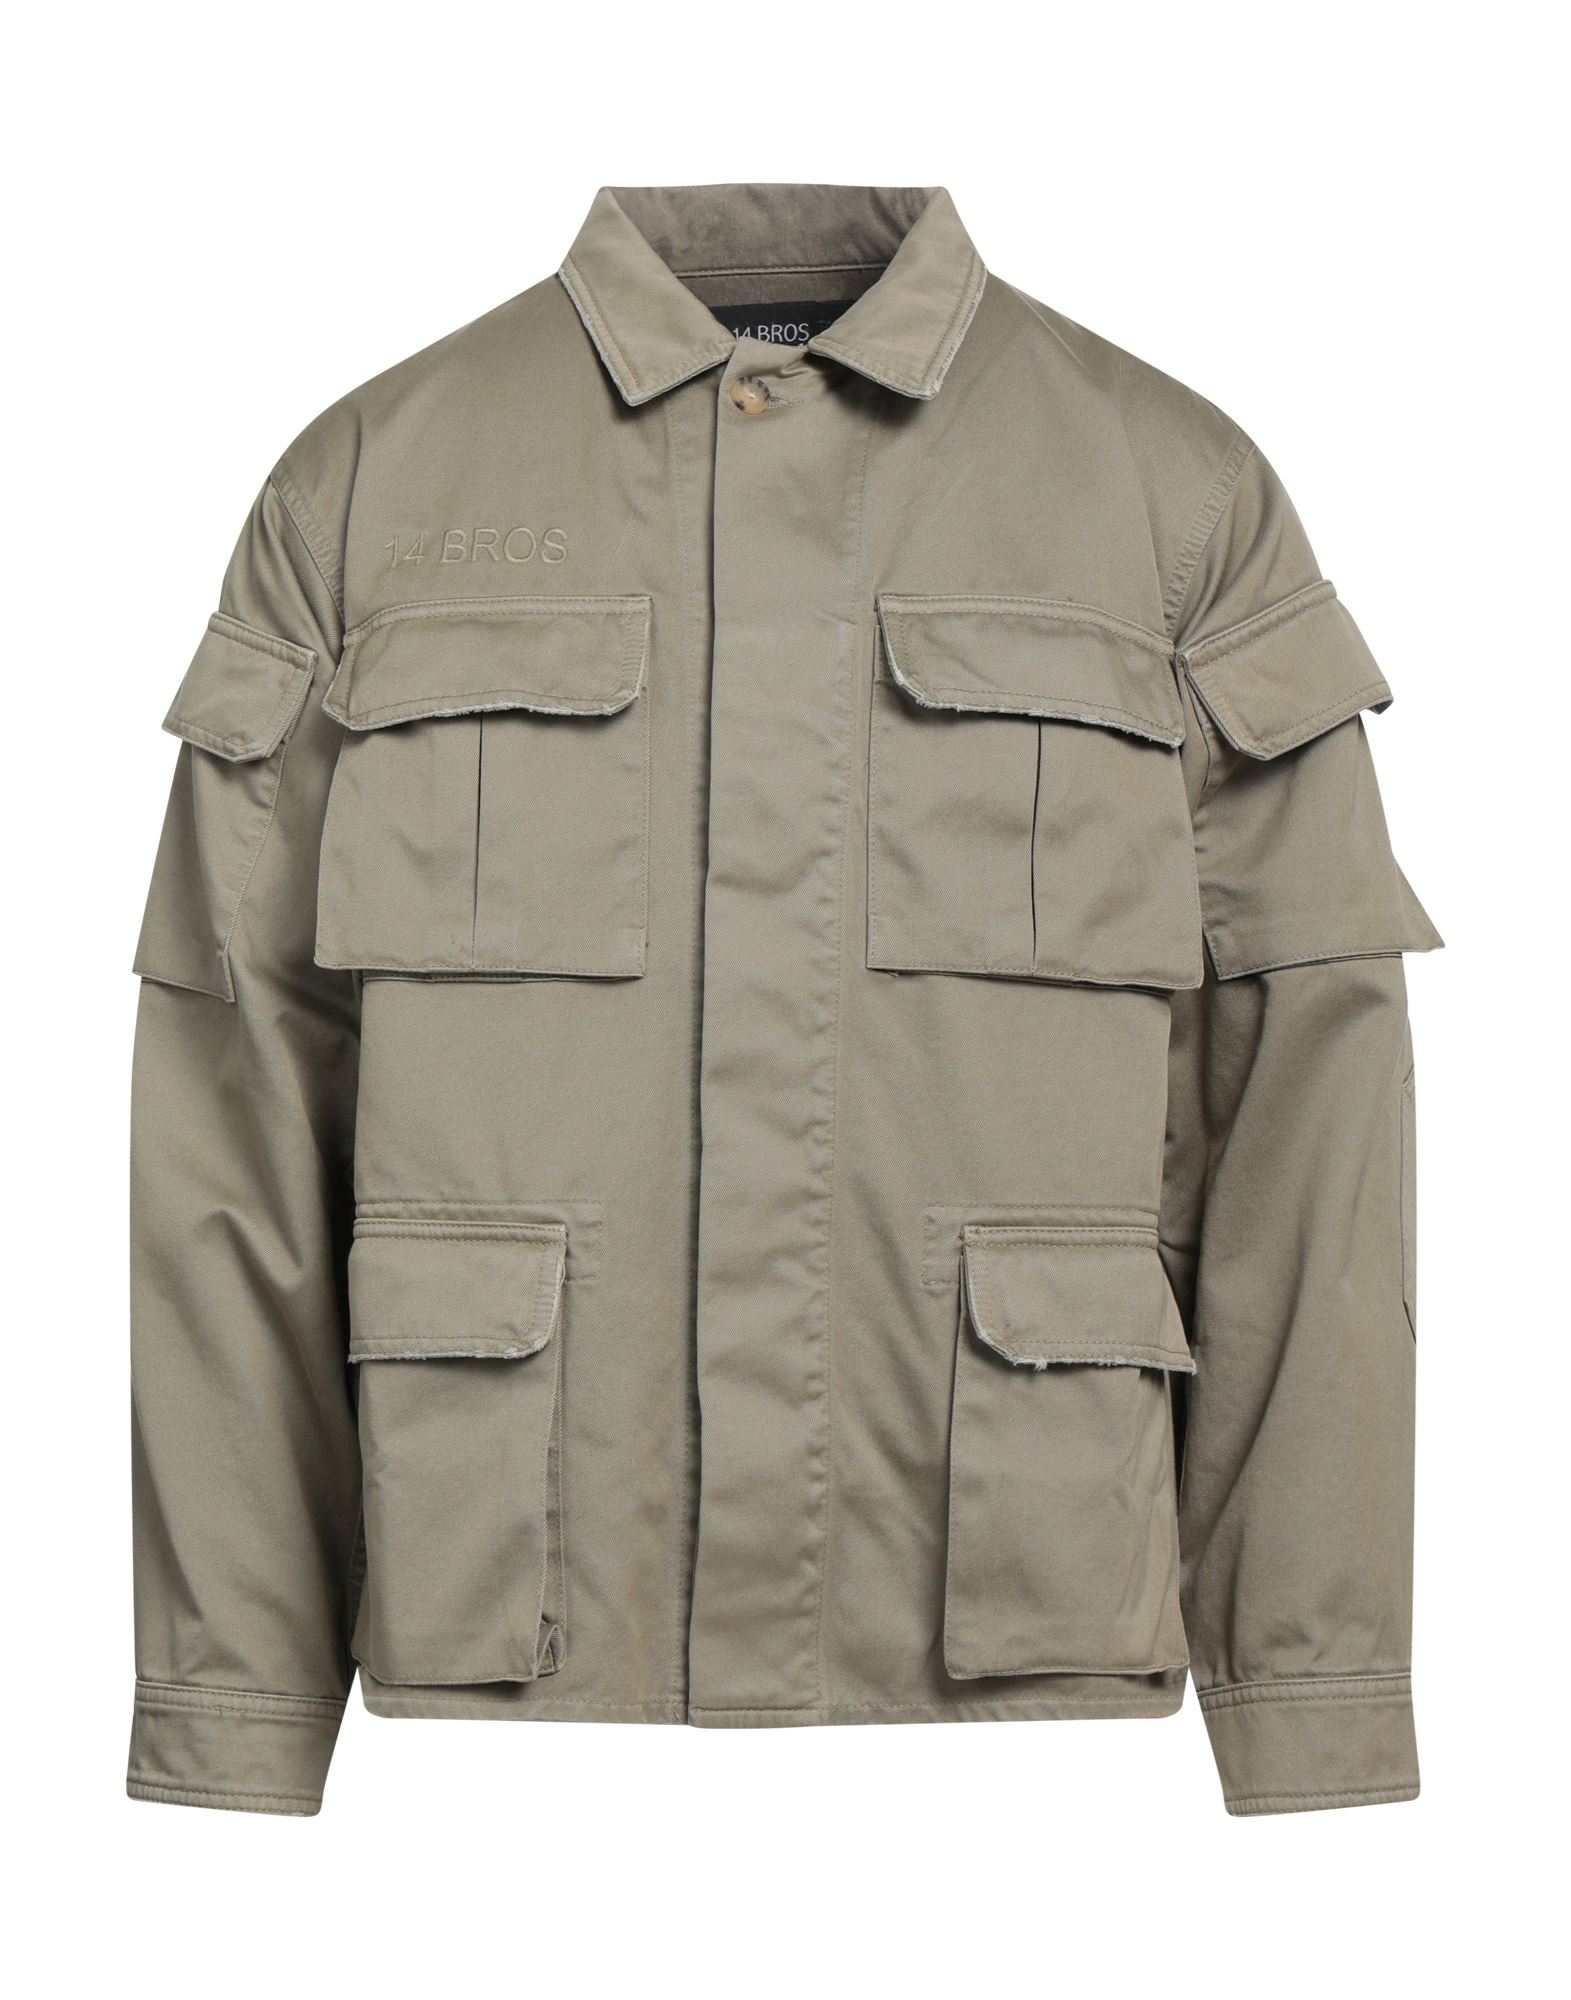 14bros Man Jacket Military Green Size Xl Cotton